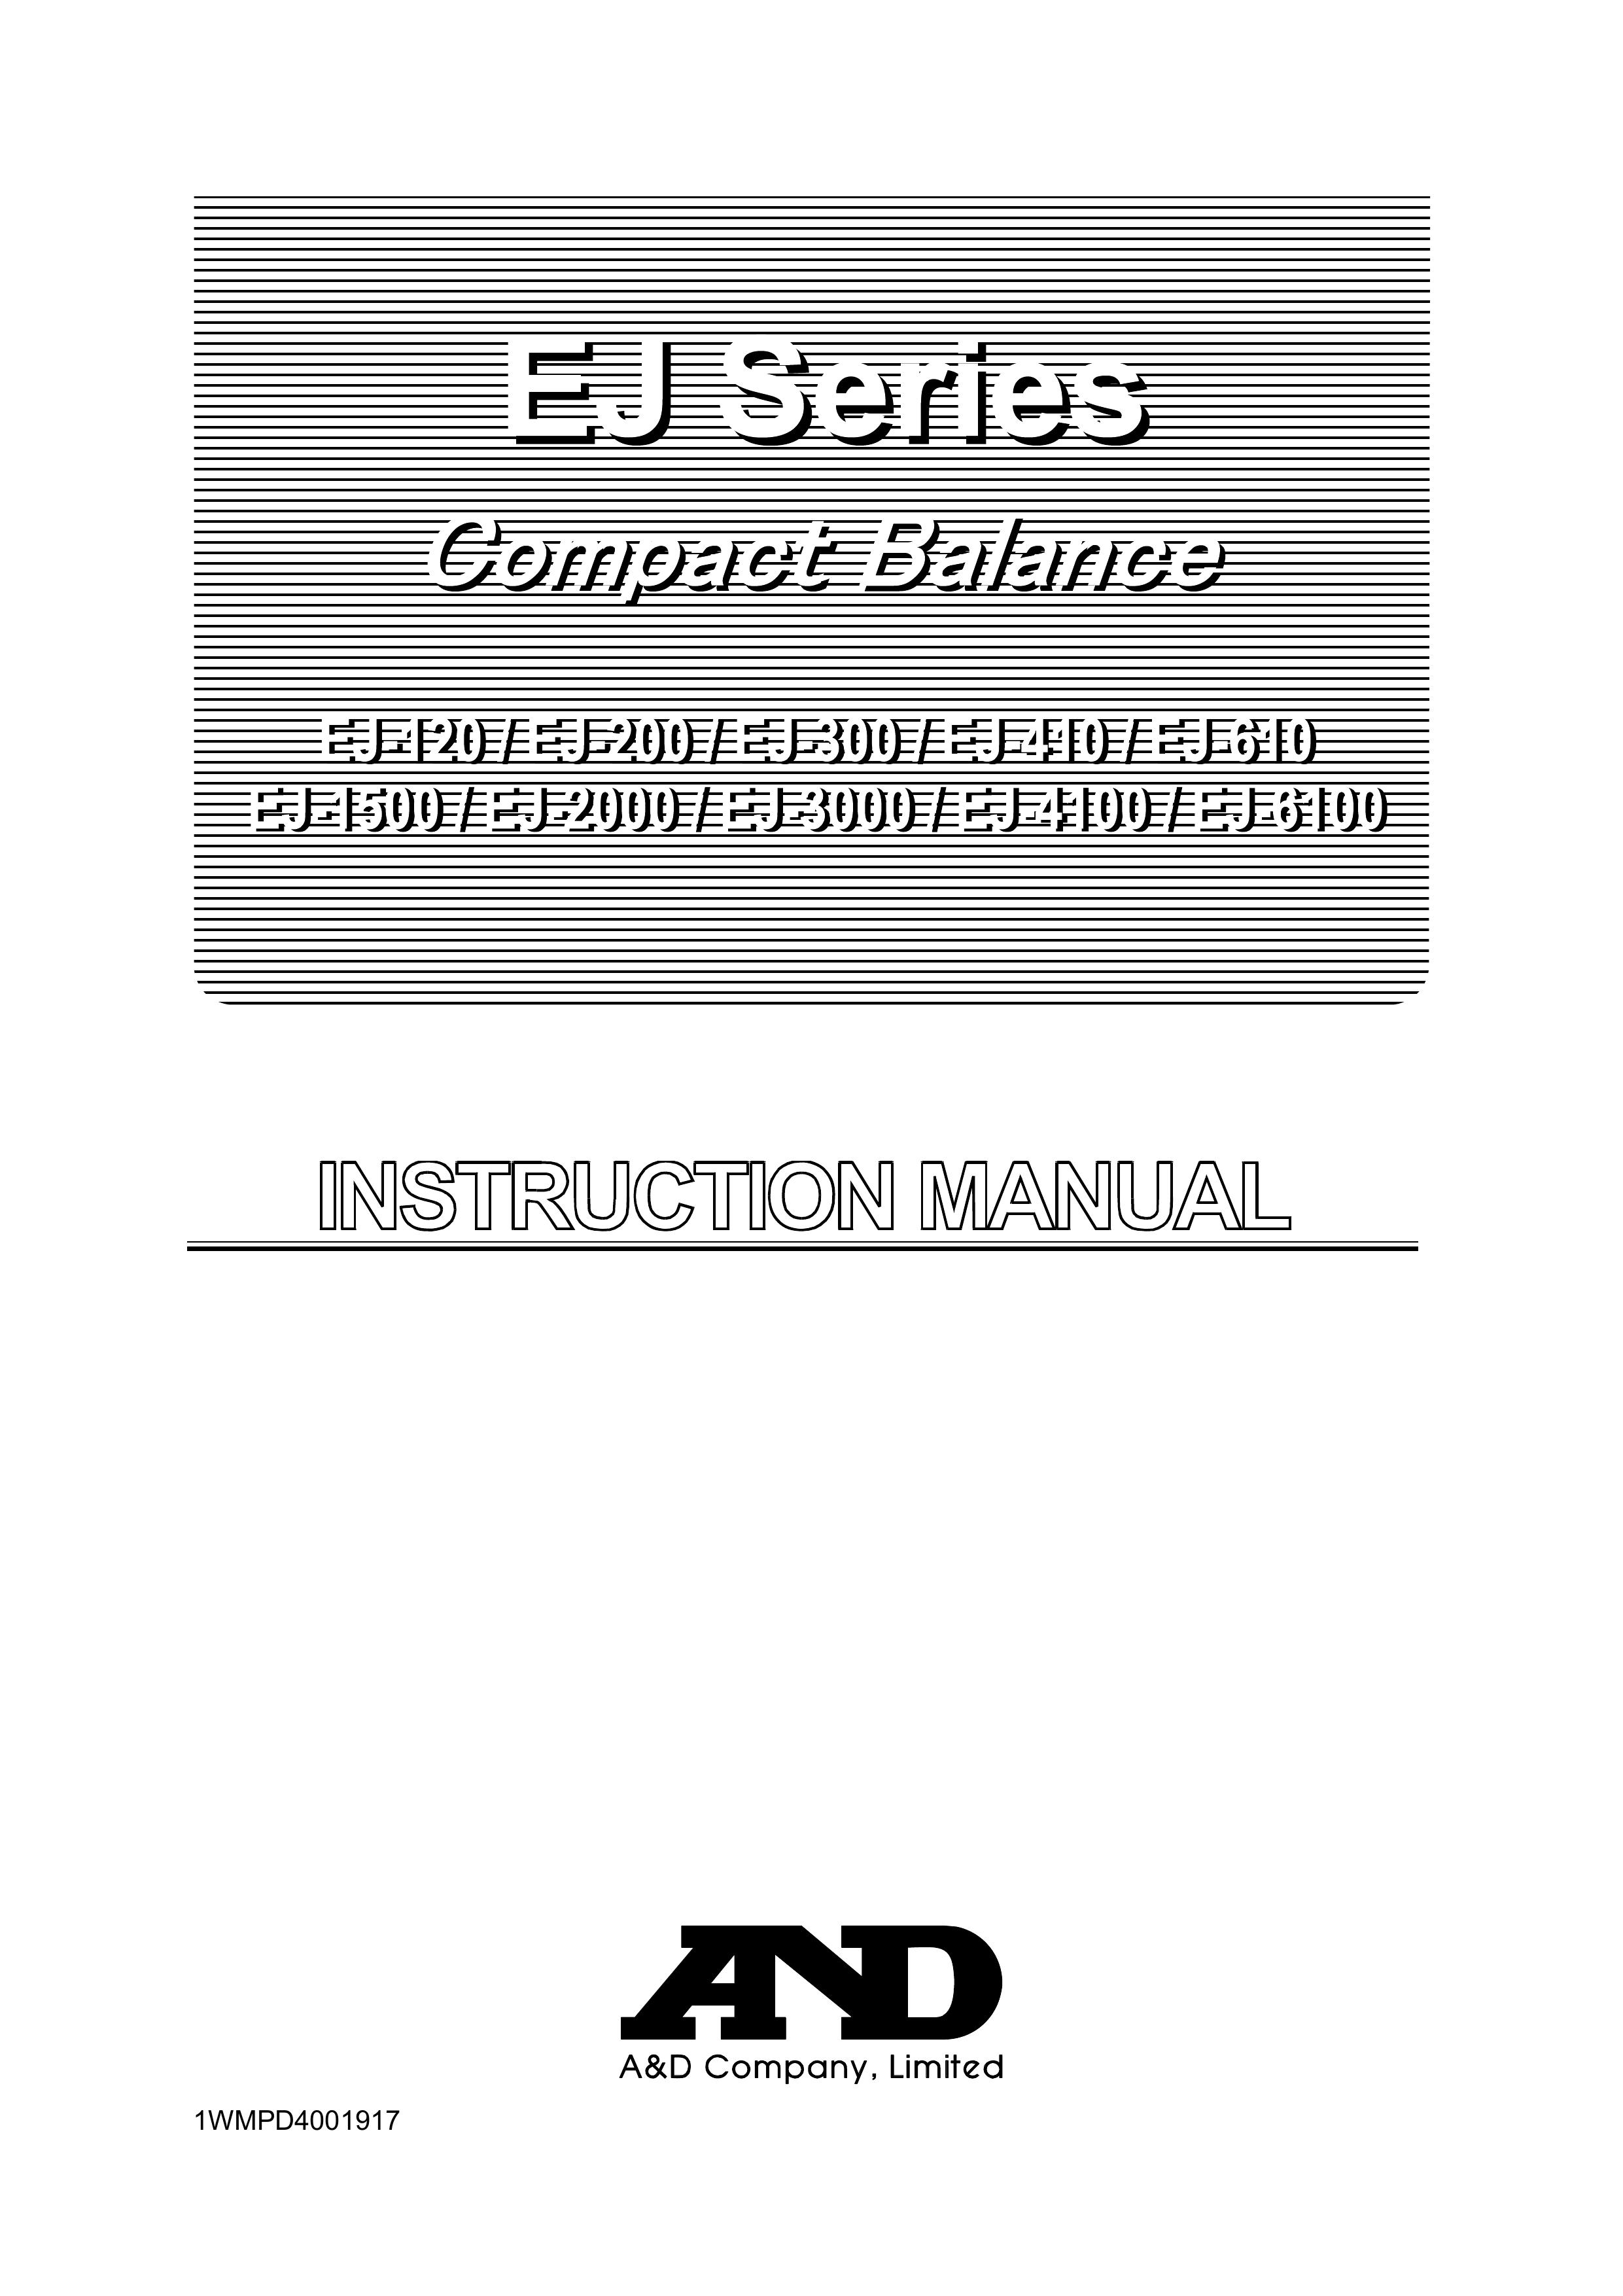 A&D EJ-300 Scale User Manual